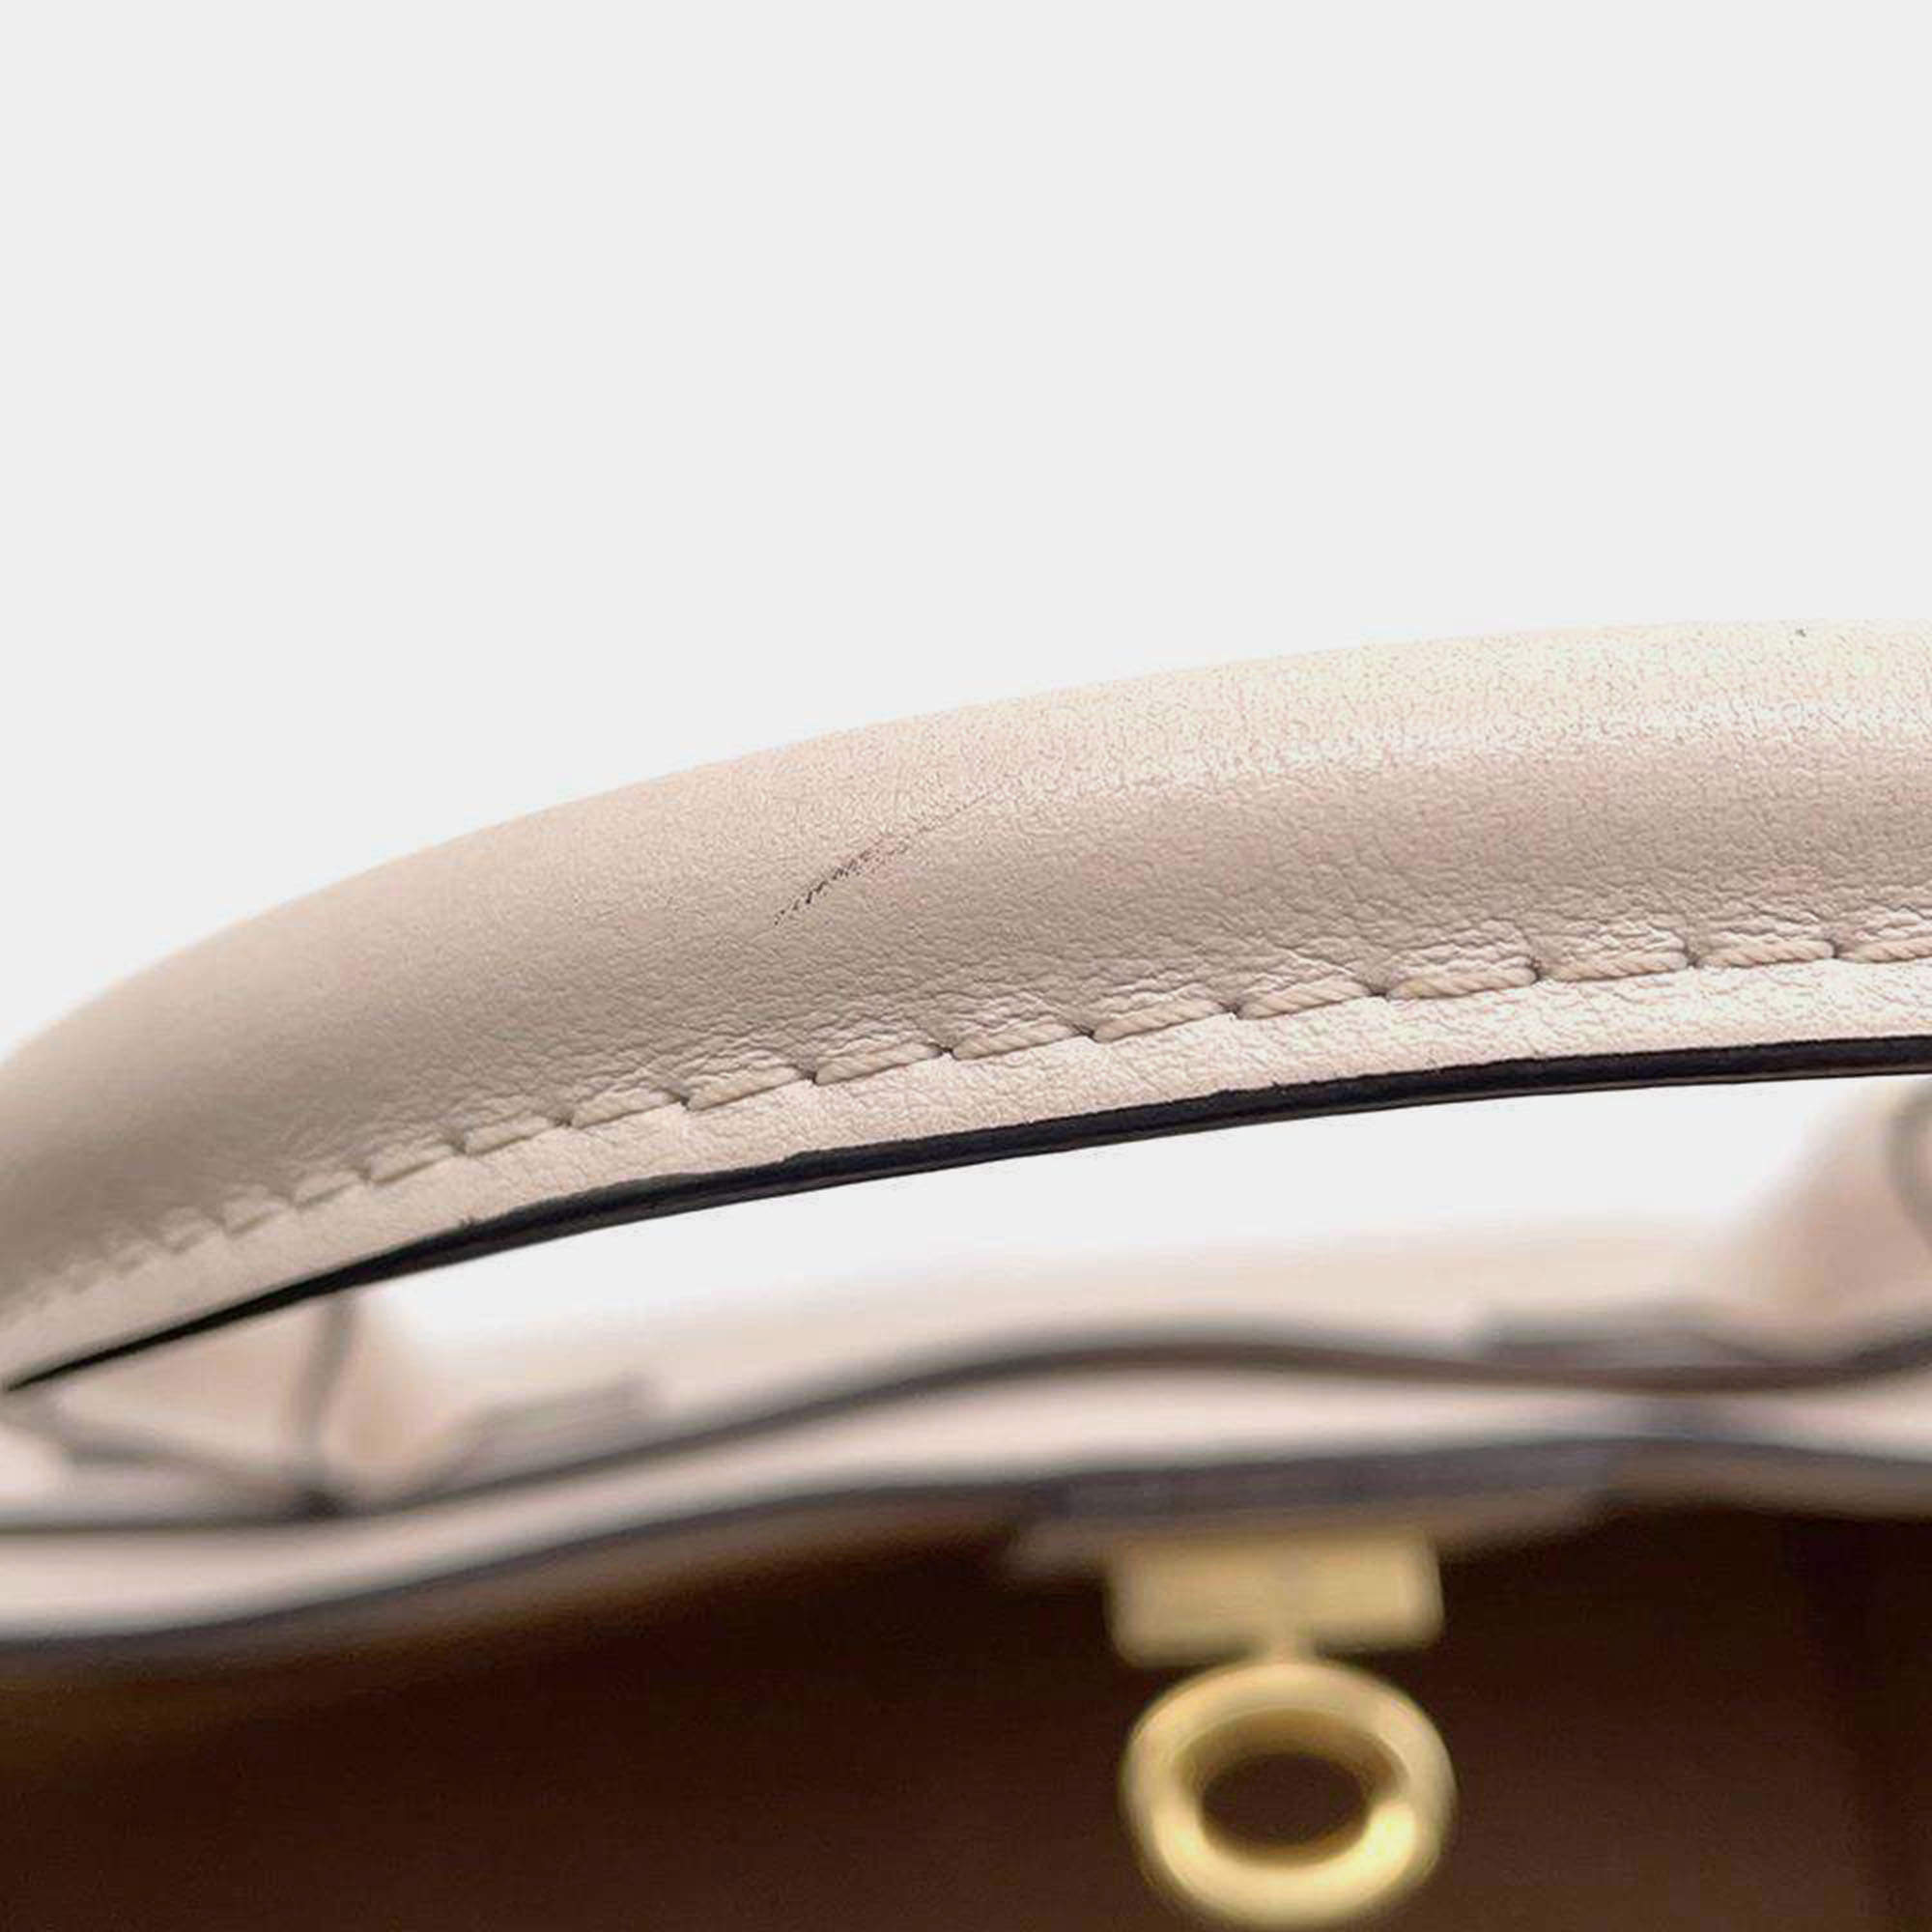 Mahina leather handbag Louis Vuitton Beige in Leather - 26163941